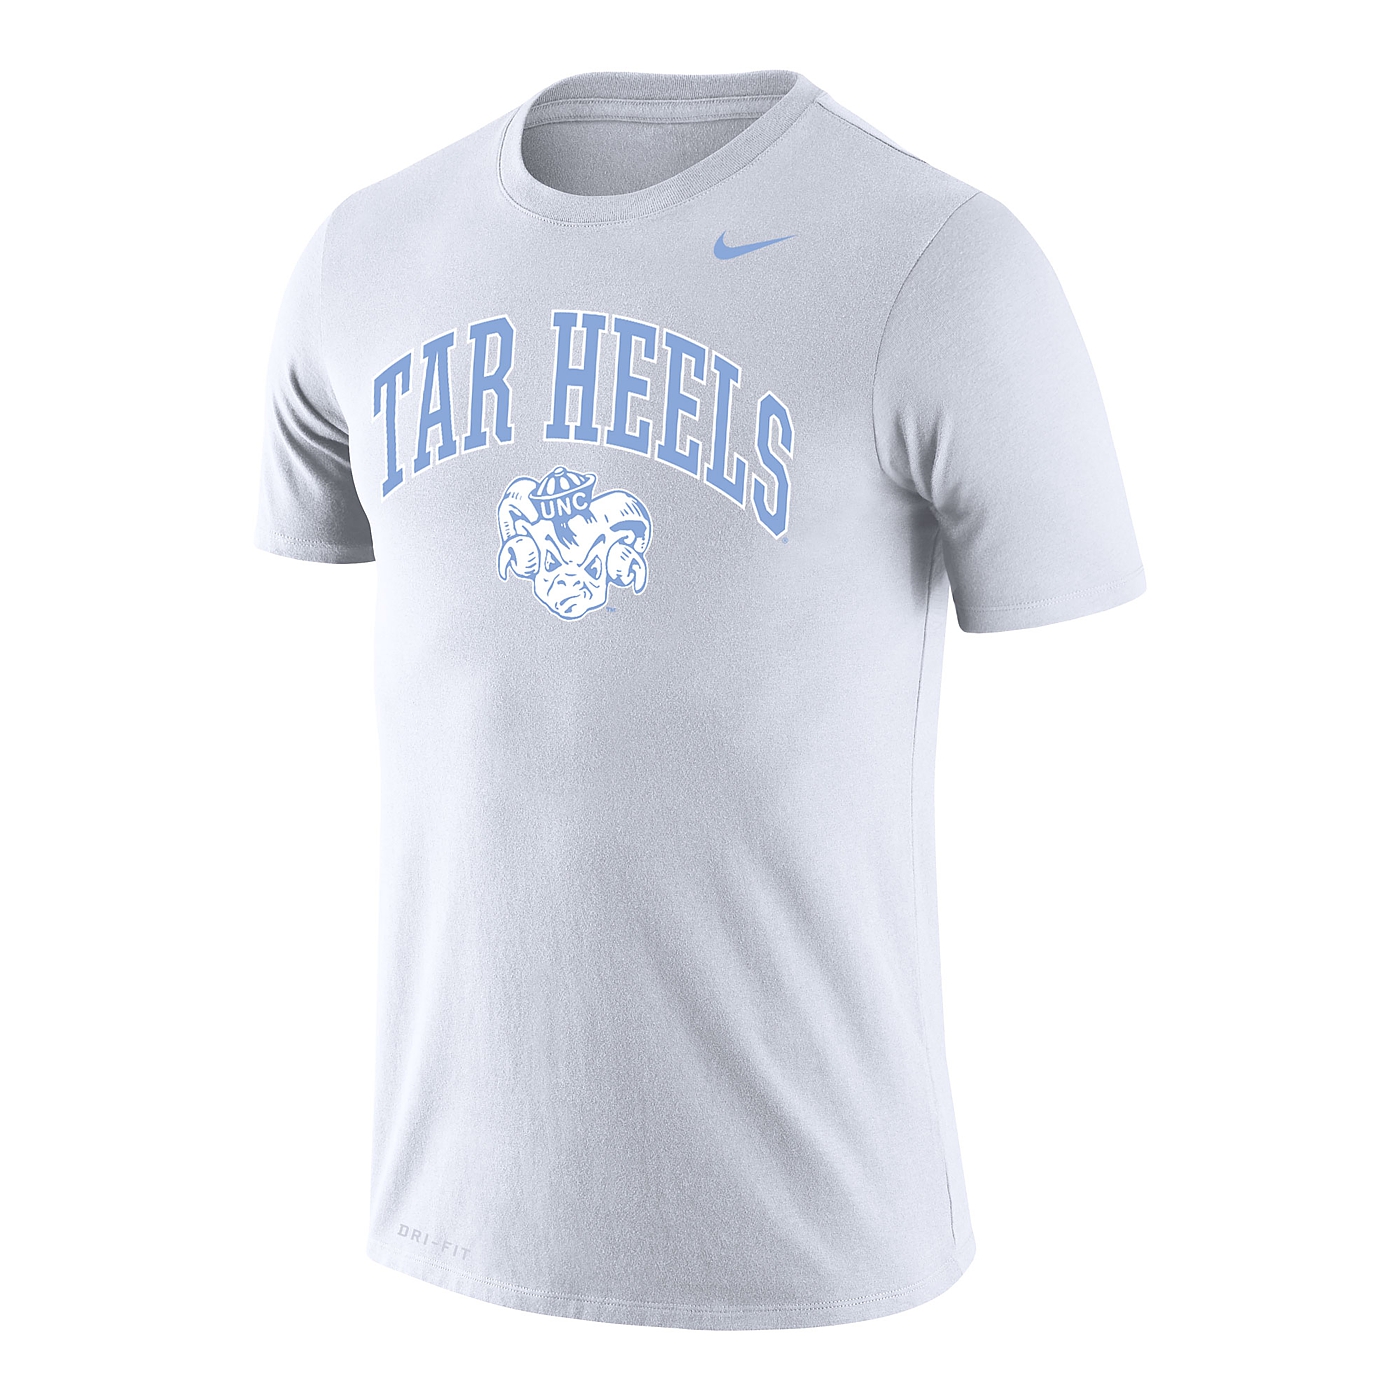 Johnny T-shirt - North Carolina Tar Heels - Tar Heels Arch Vault Ram Legend T (White) by Nike